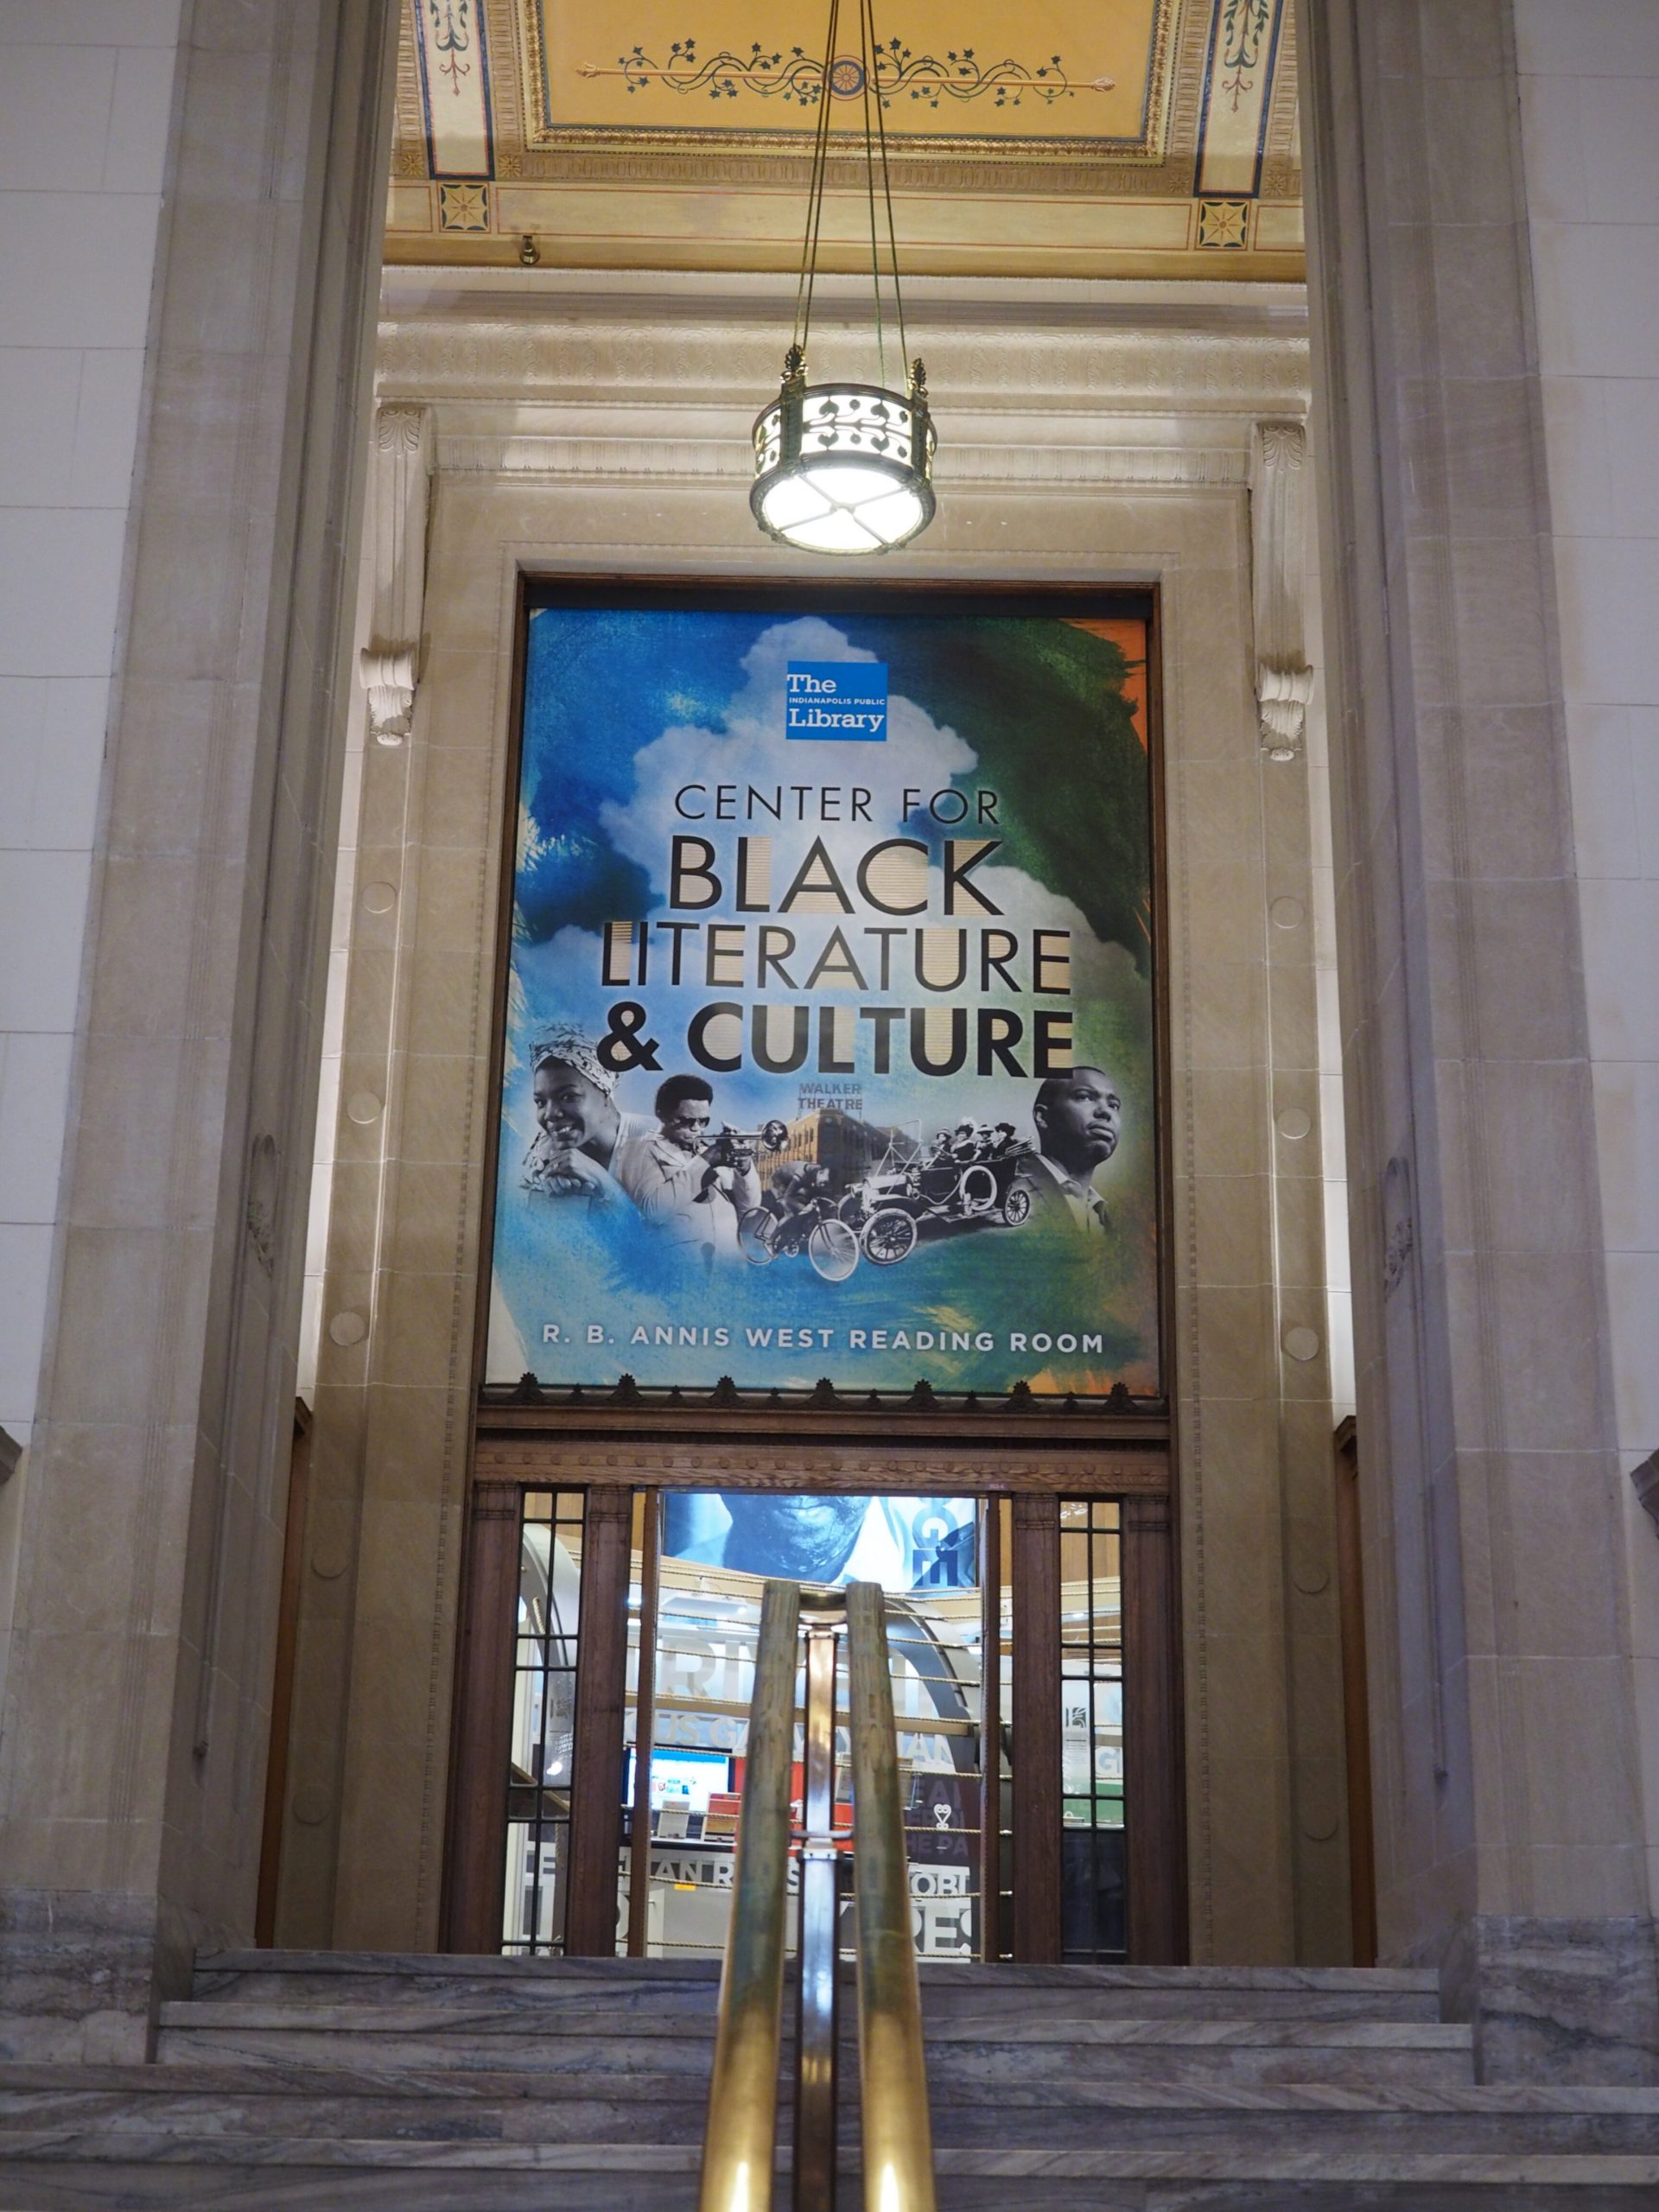 Center for Black Literature & Culture